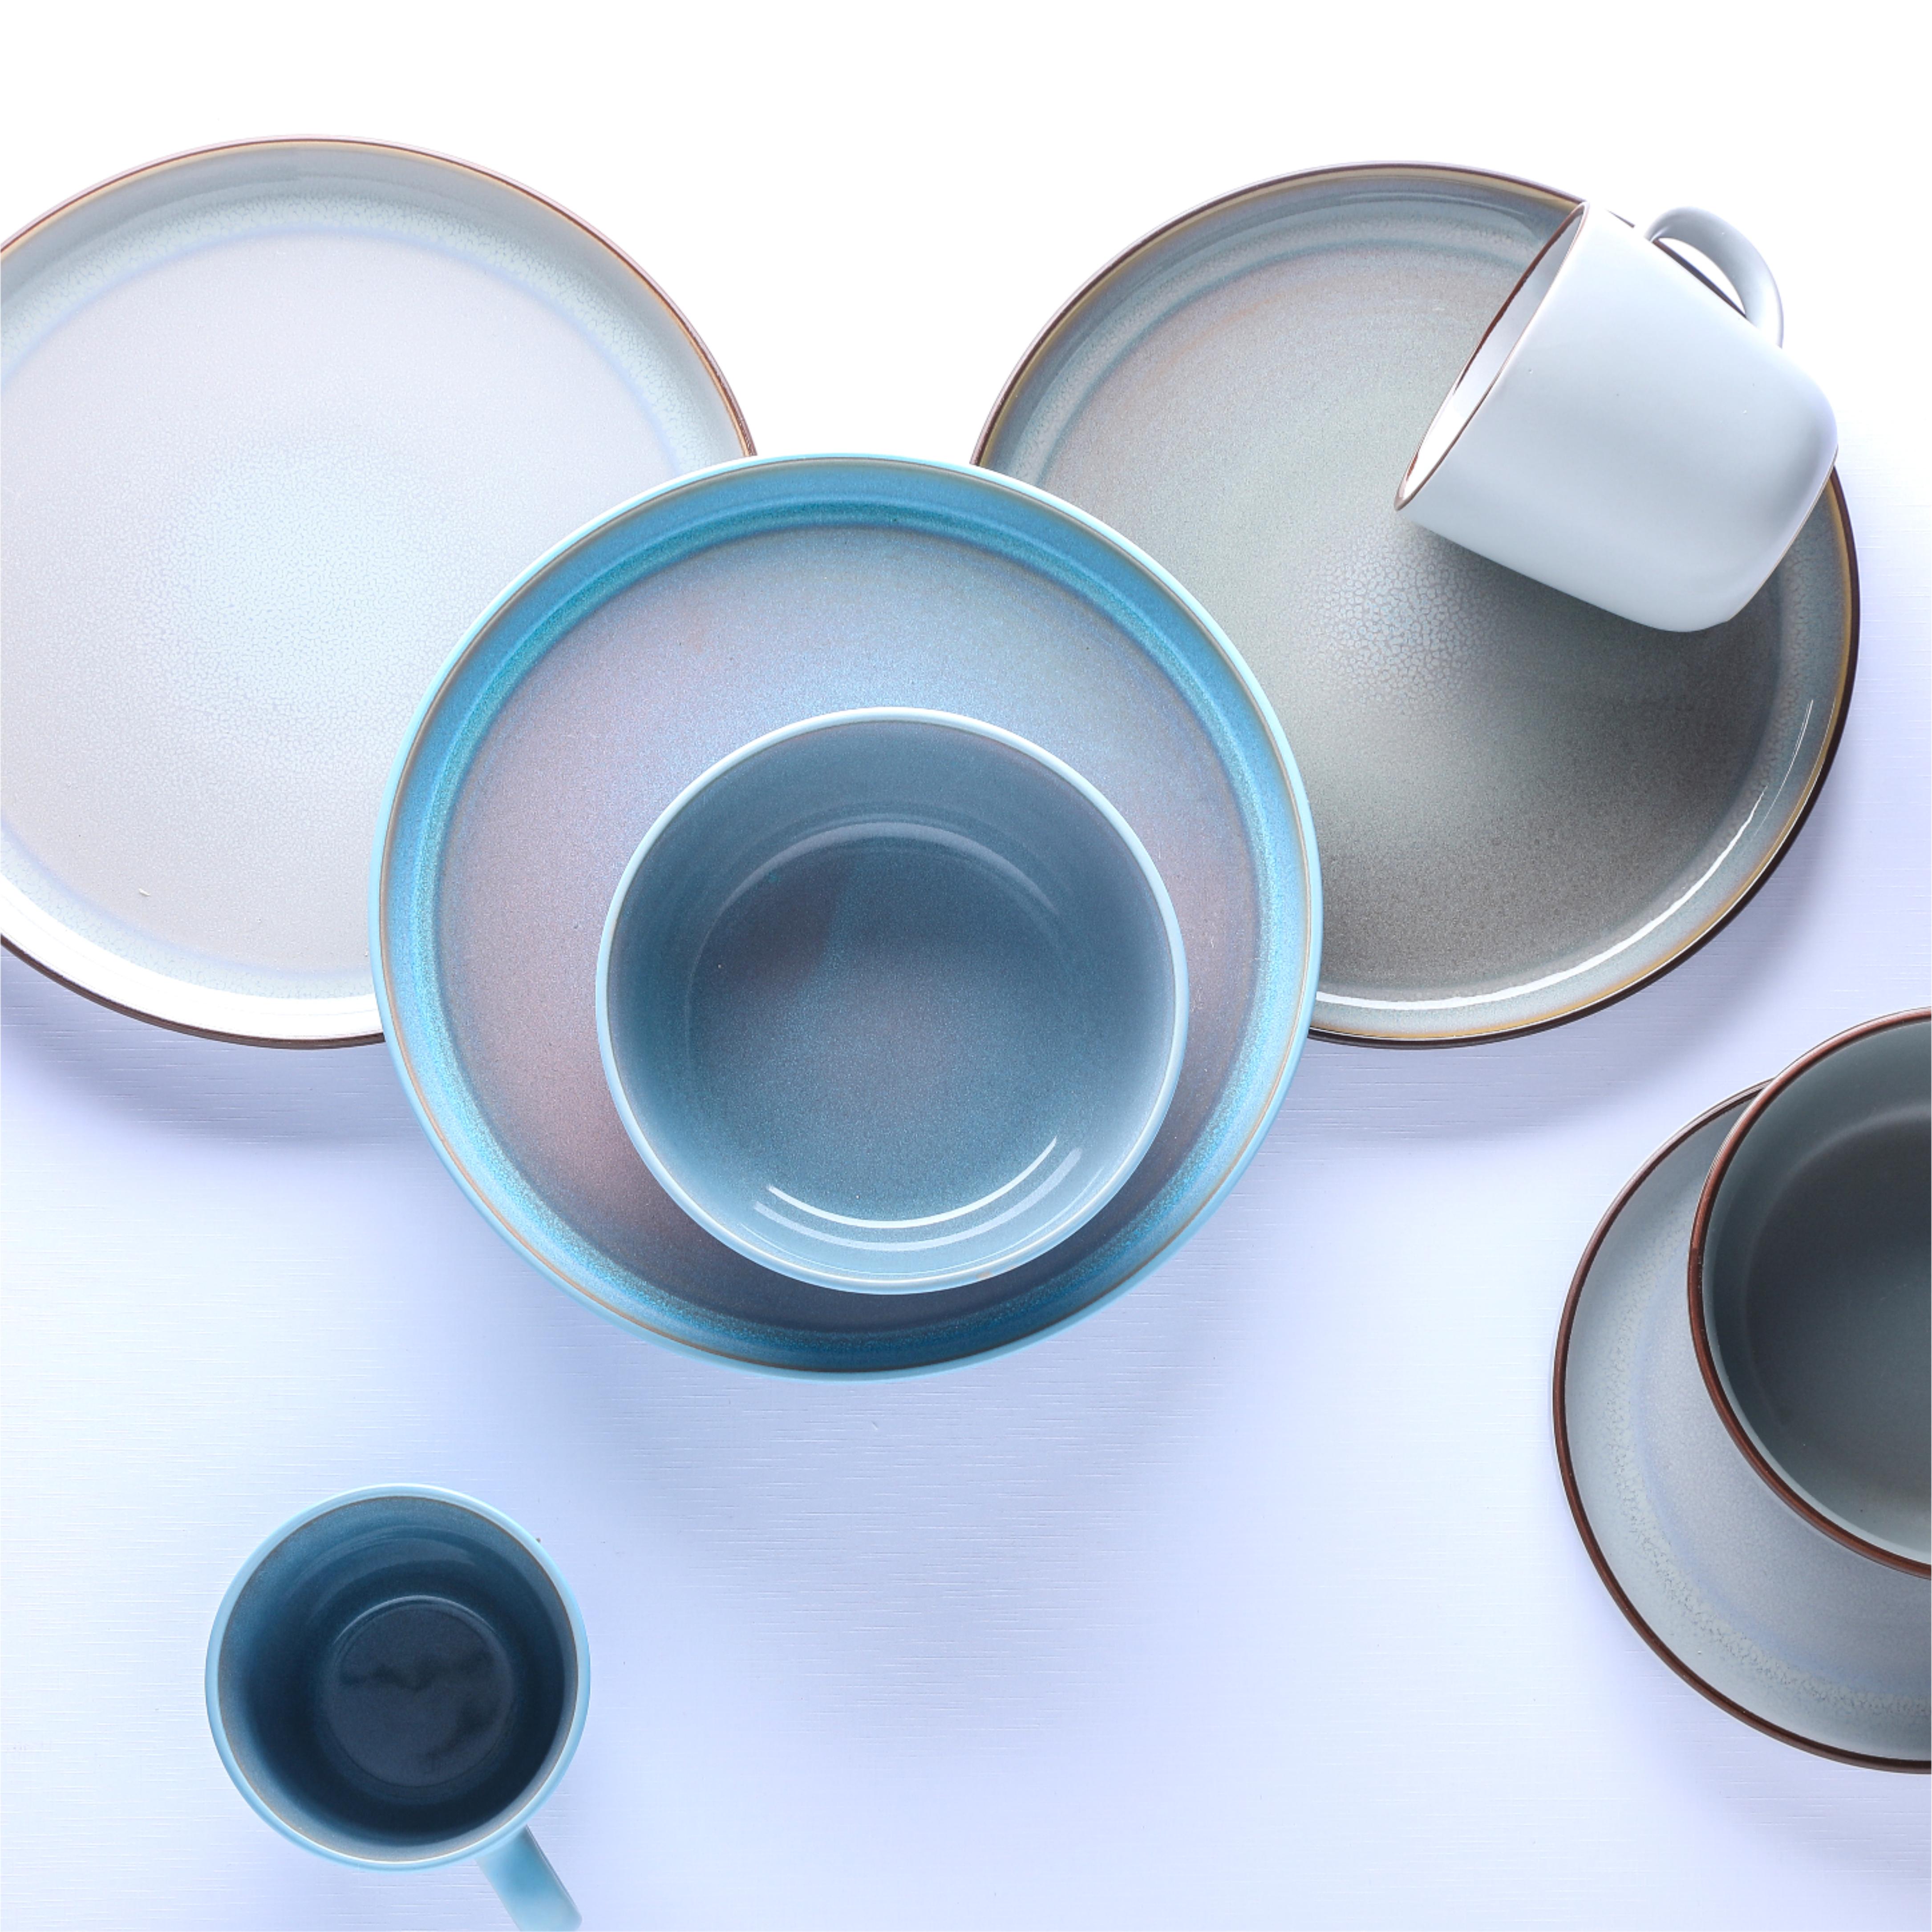 Daily use Reactive glaze stoneware dinnerware set